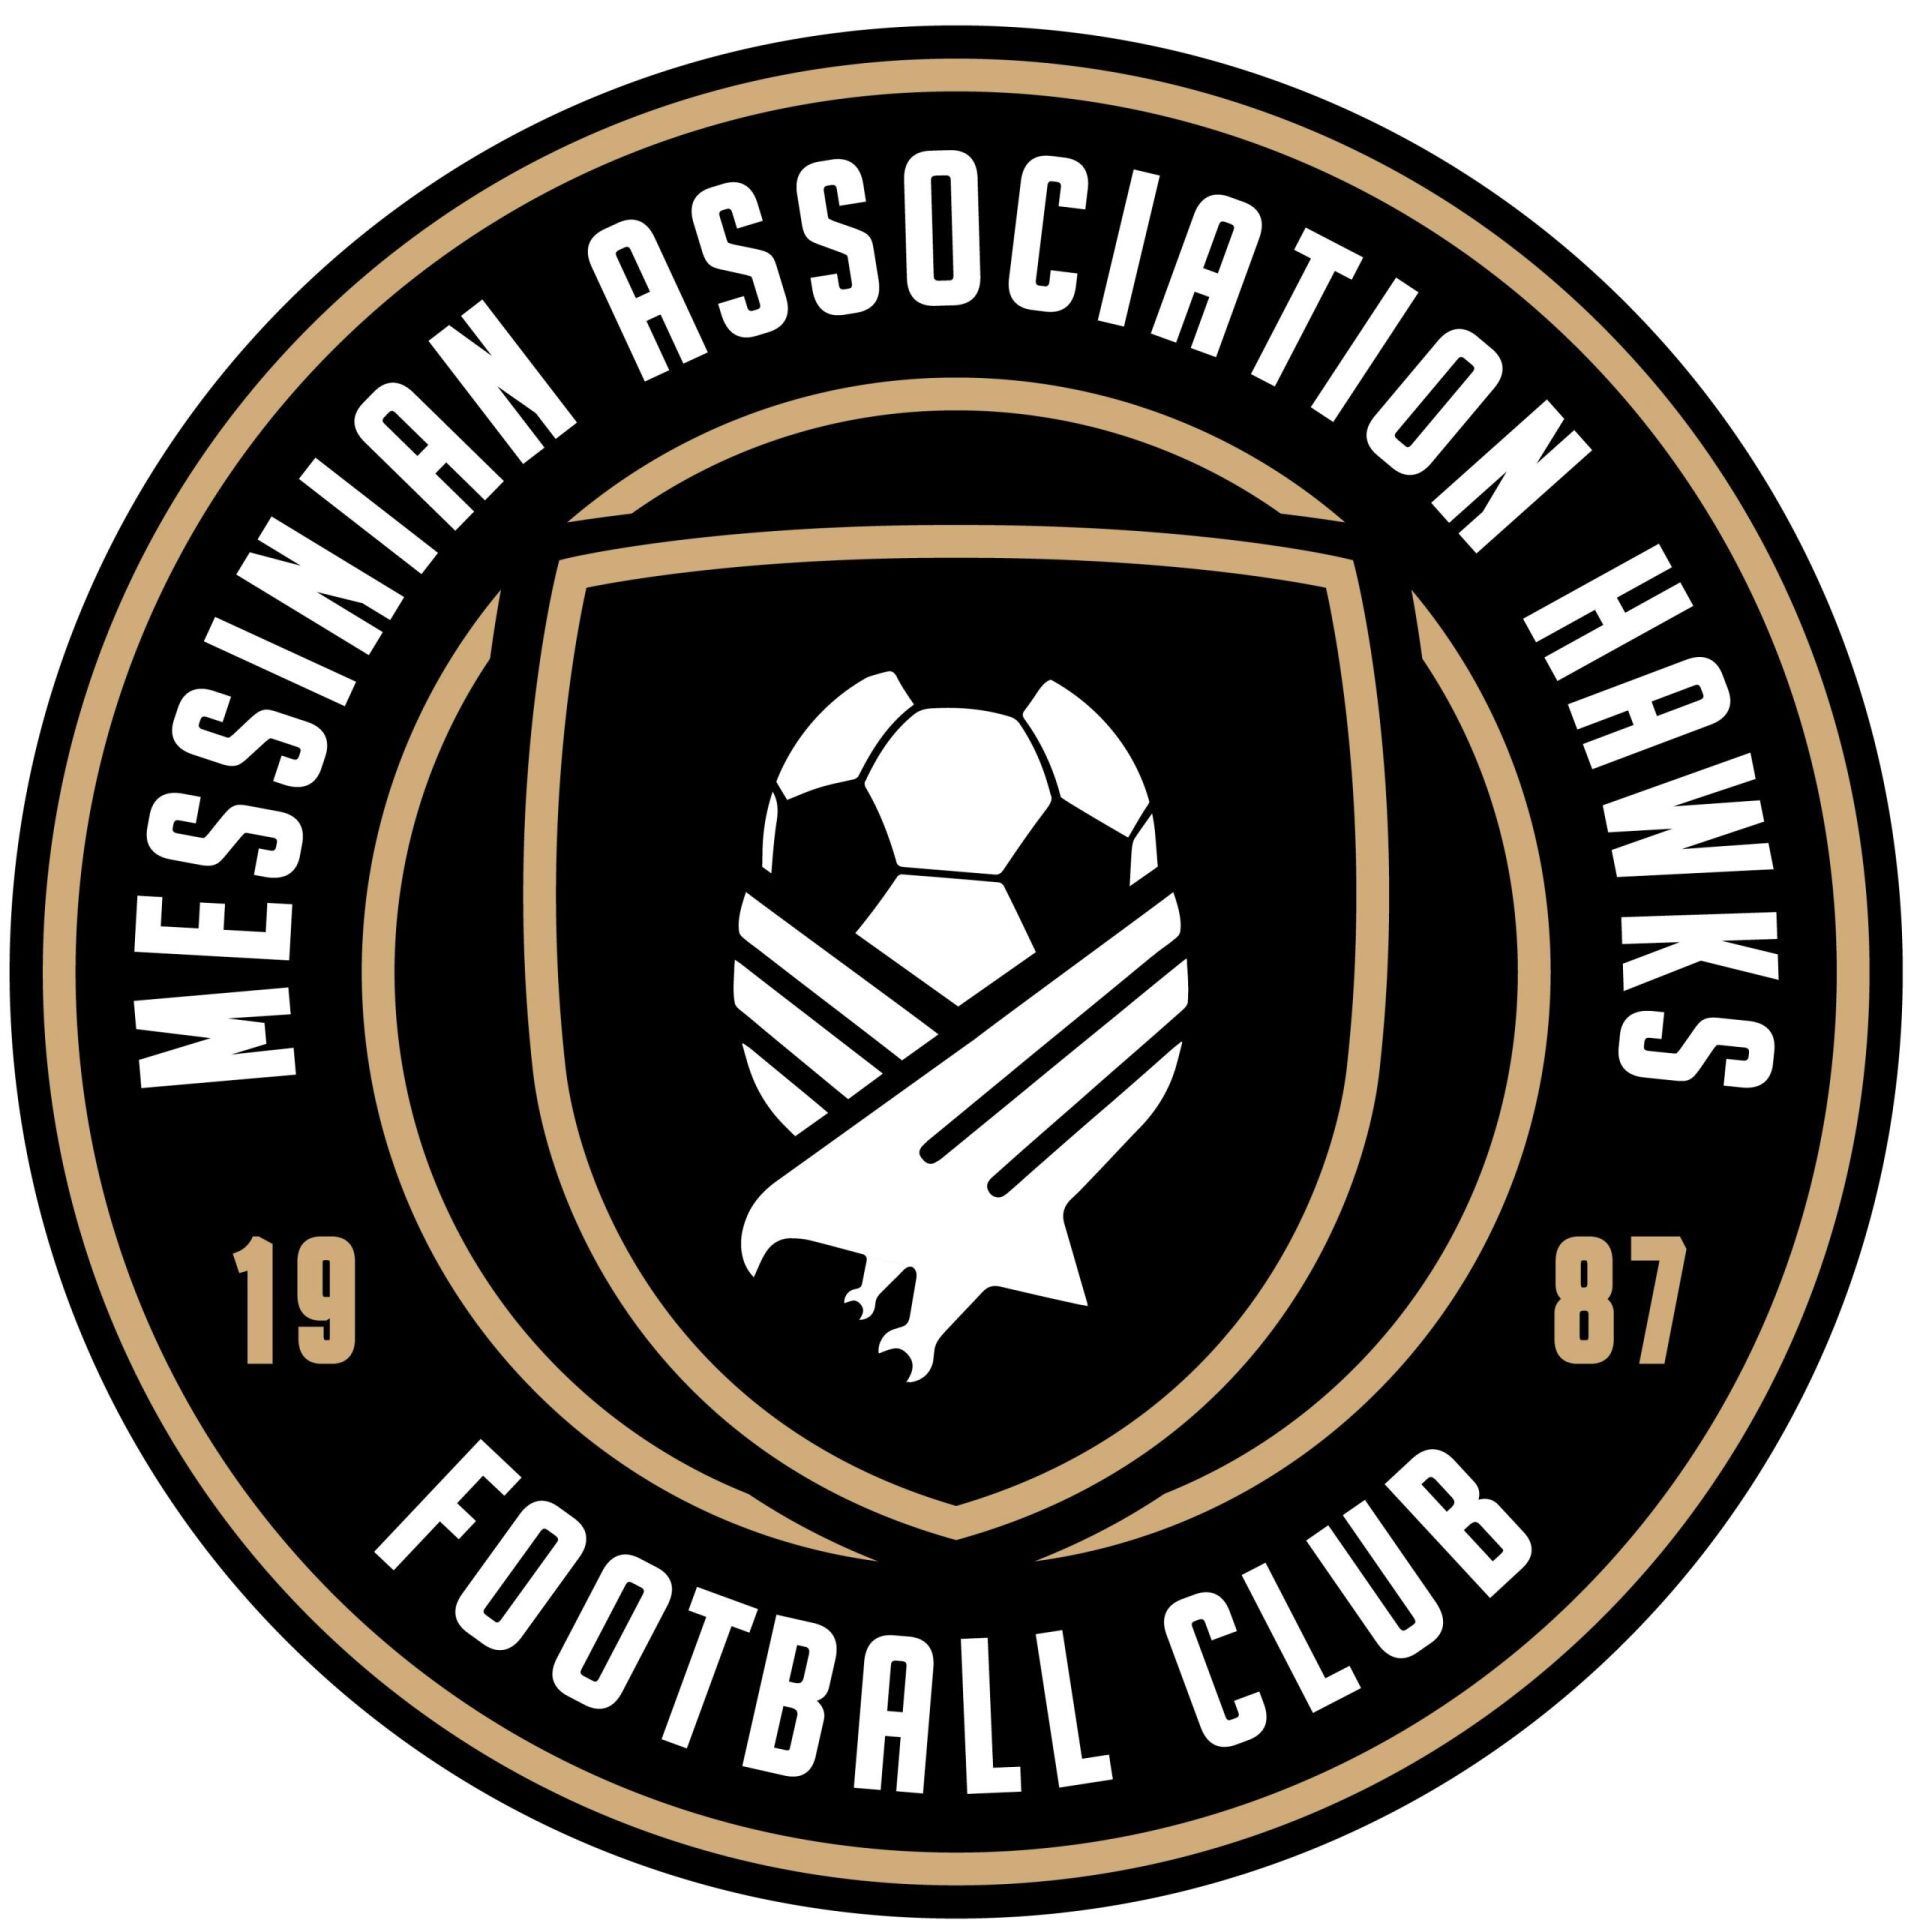 Messinian Association Hawks Football Club